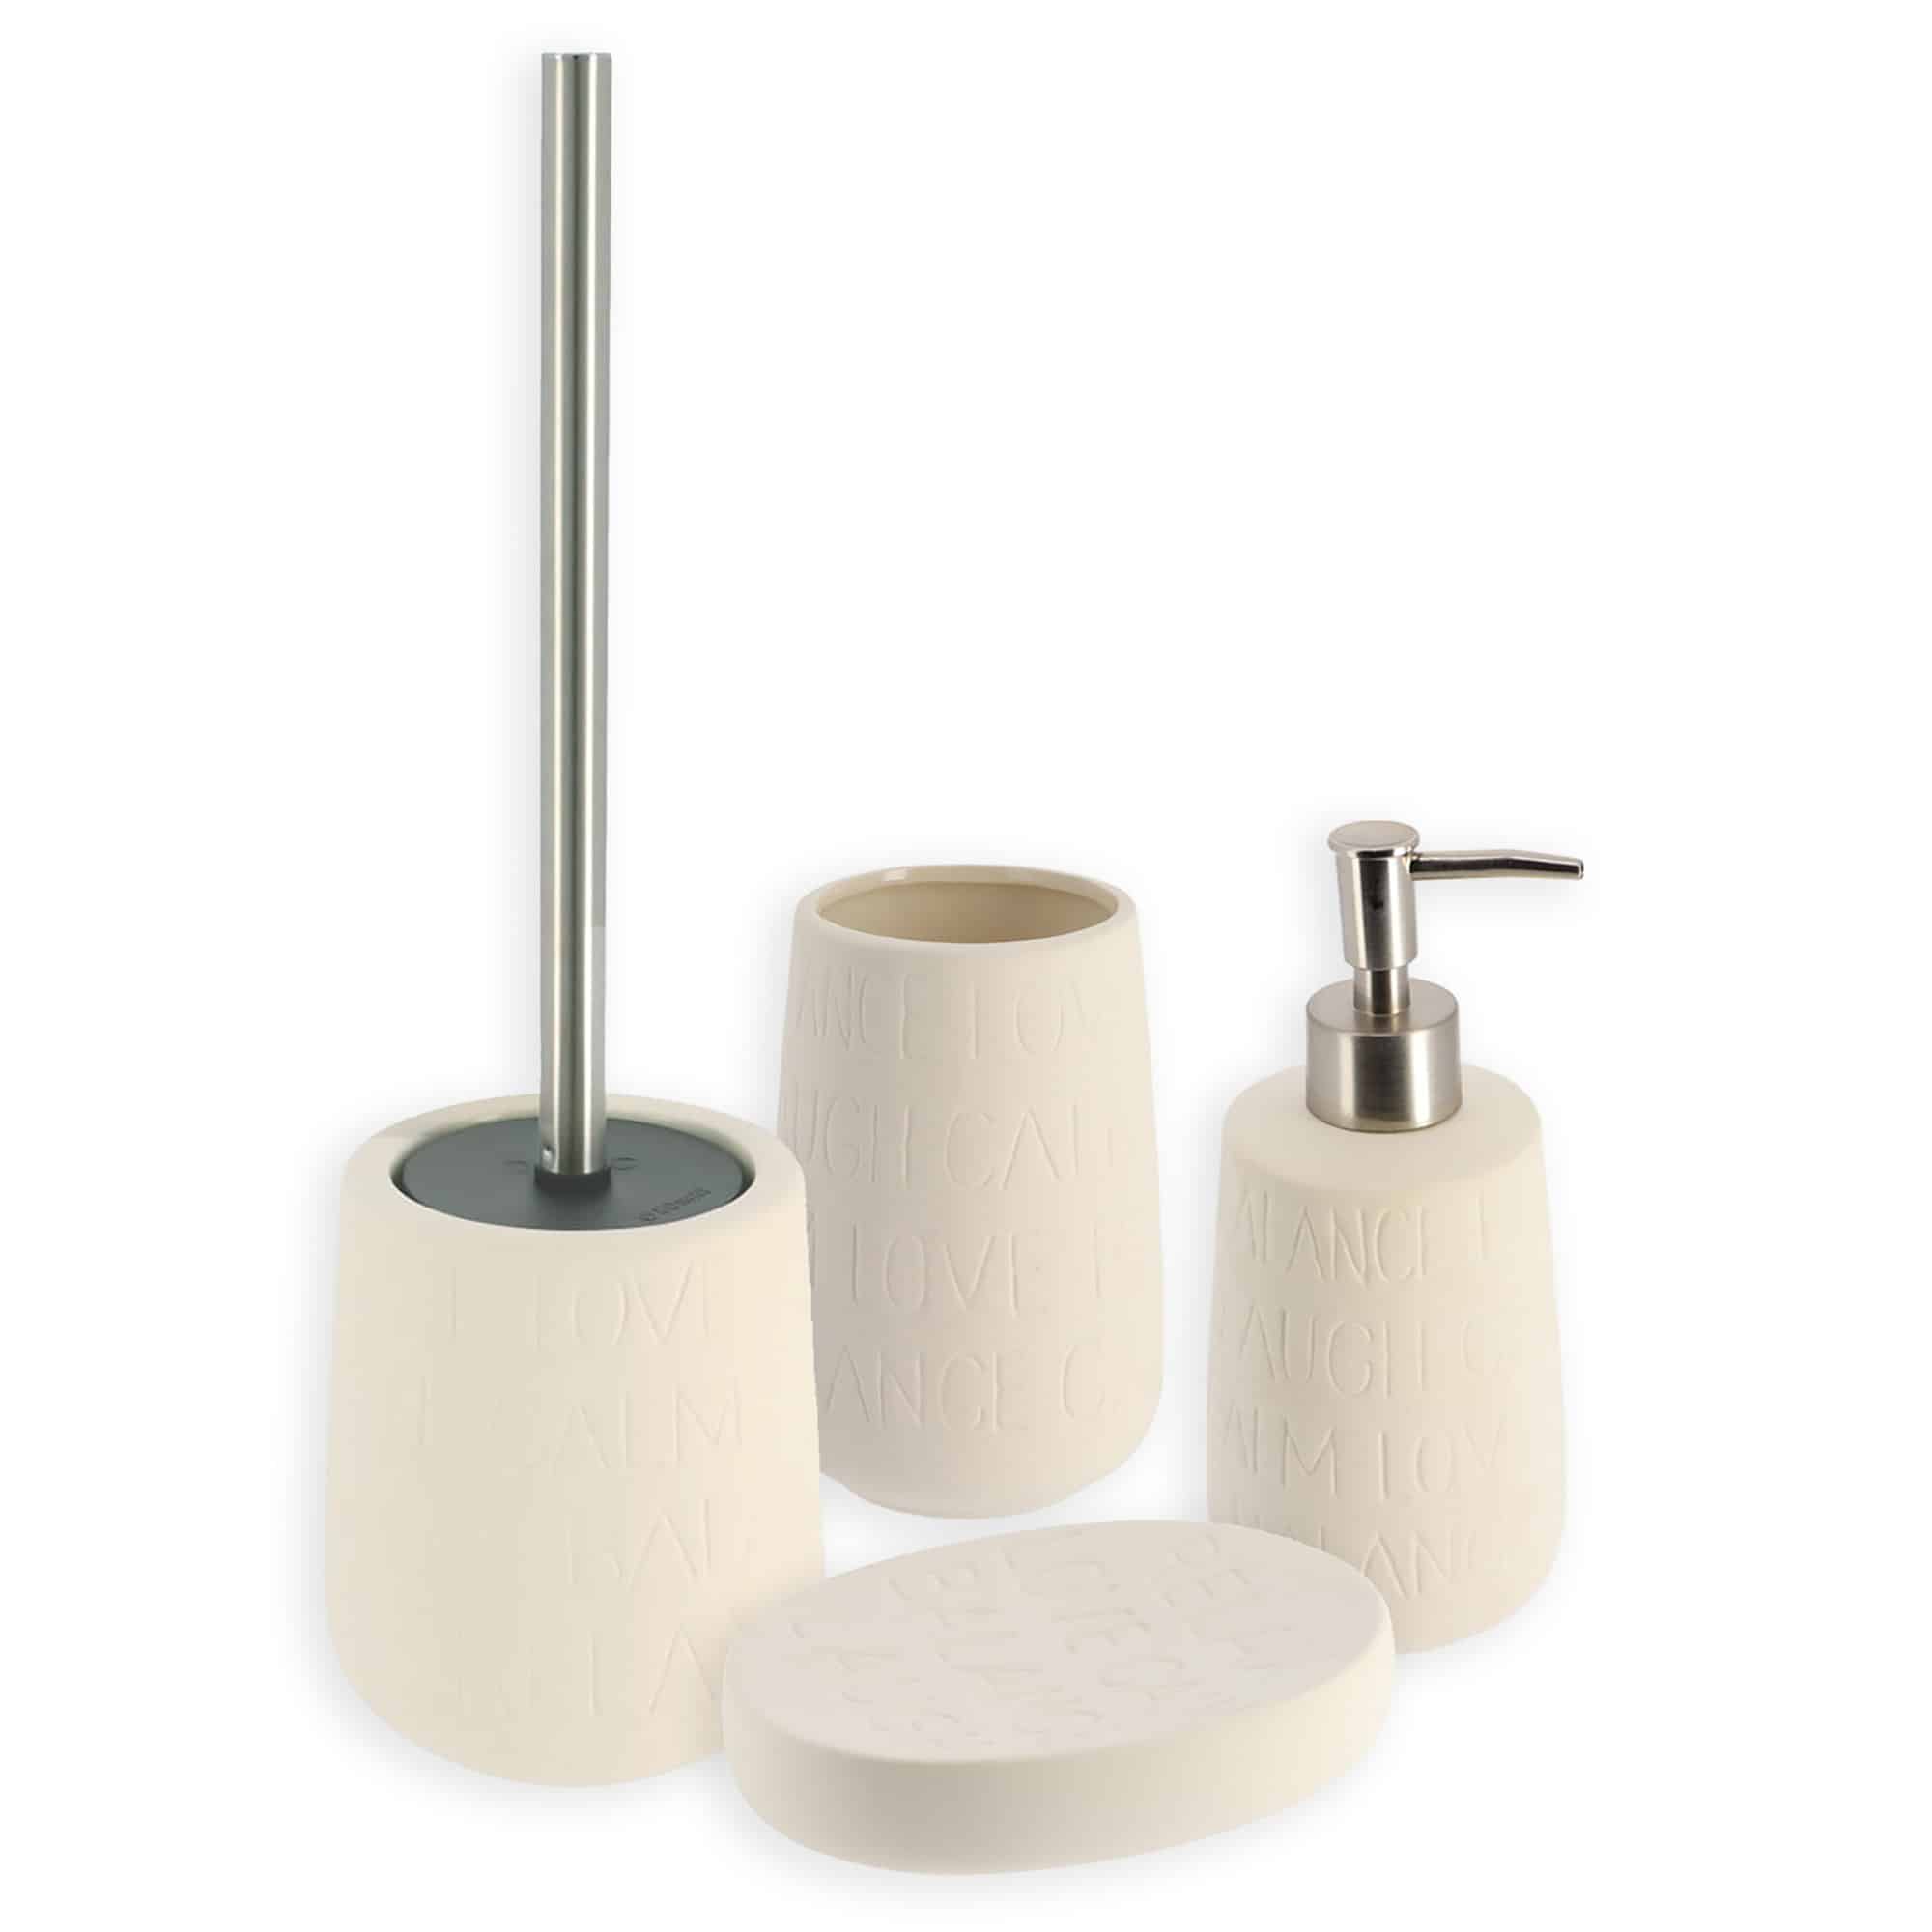 https://evideco.com/wp-content/uploads/2021/10/6688104-Relax-Ivory-Free-standing-Toilet-Brush-and-Holder-Set-Beige-4.jpg